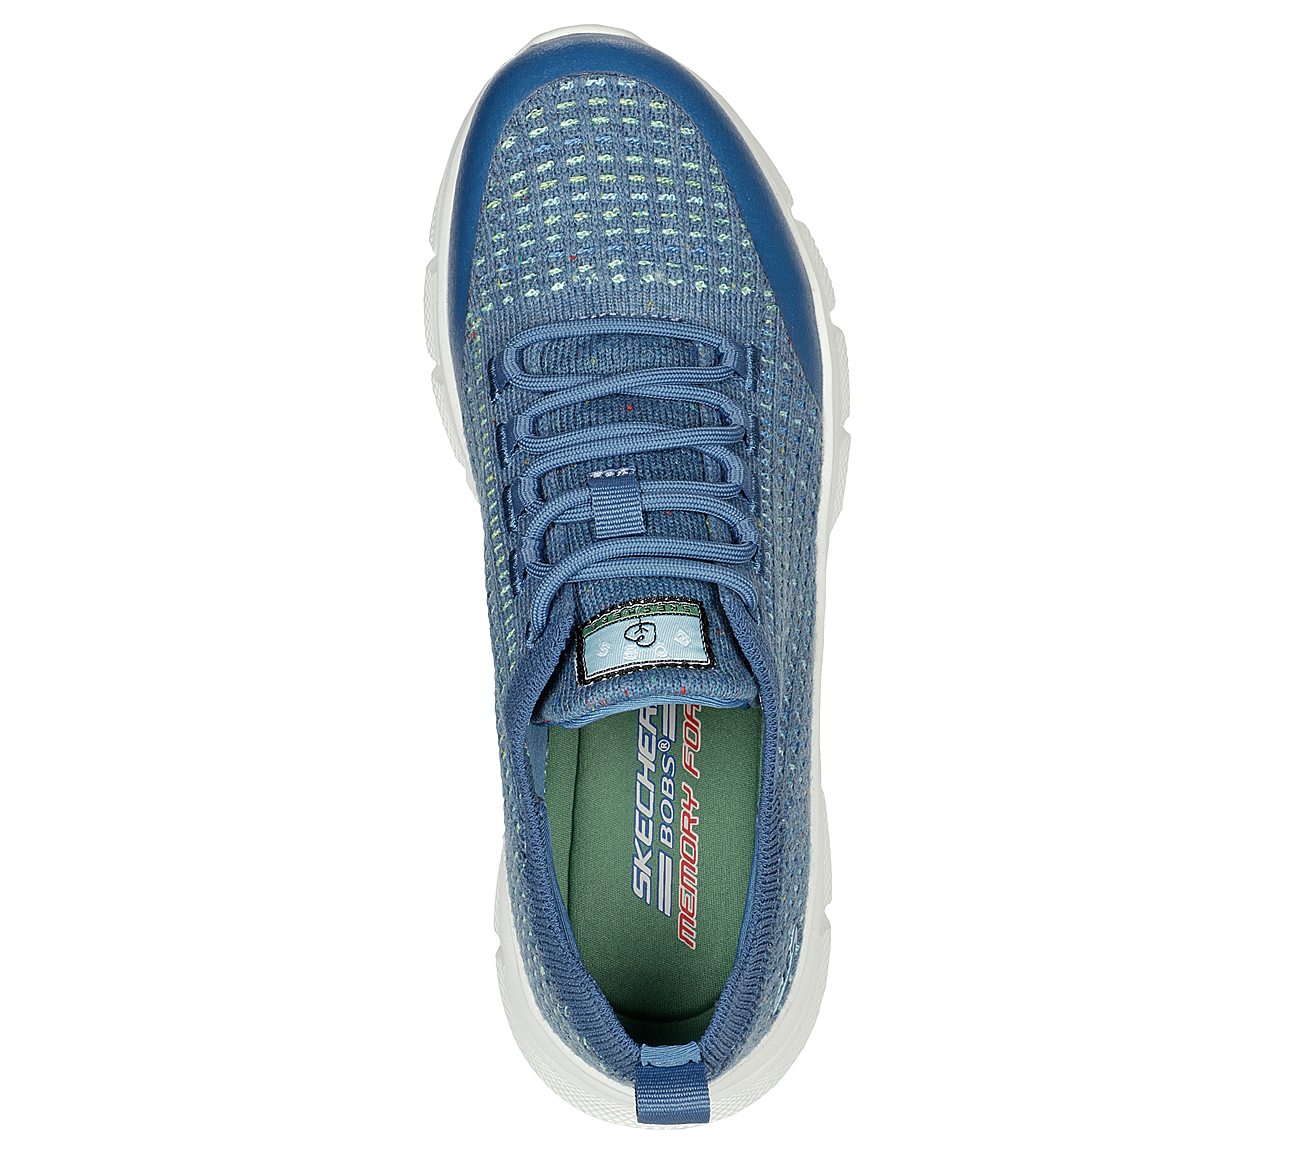 BOBS B FLEX - CLEAN SPIRIT, BLUE/MULTI Footwear Top View